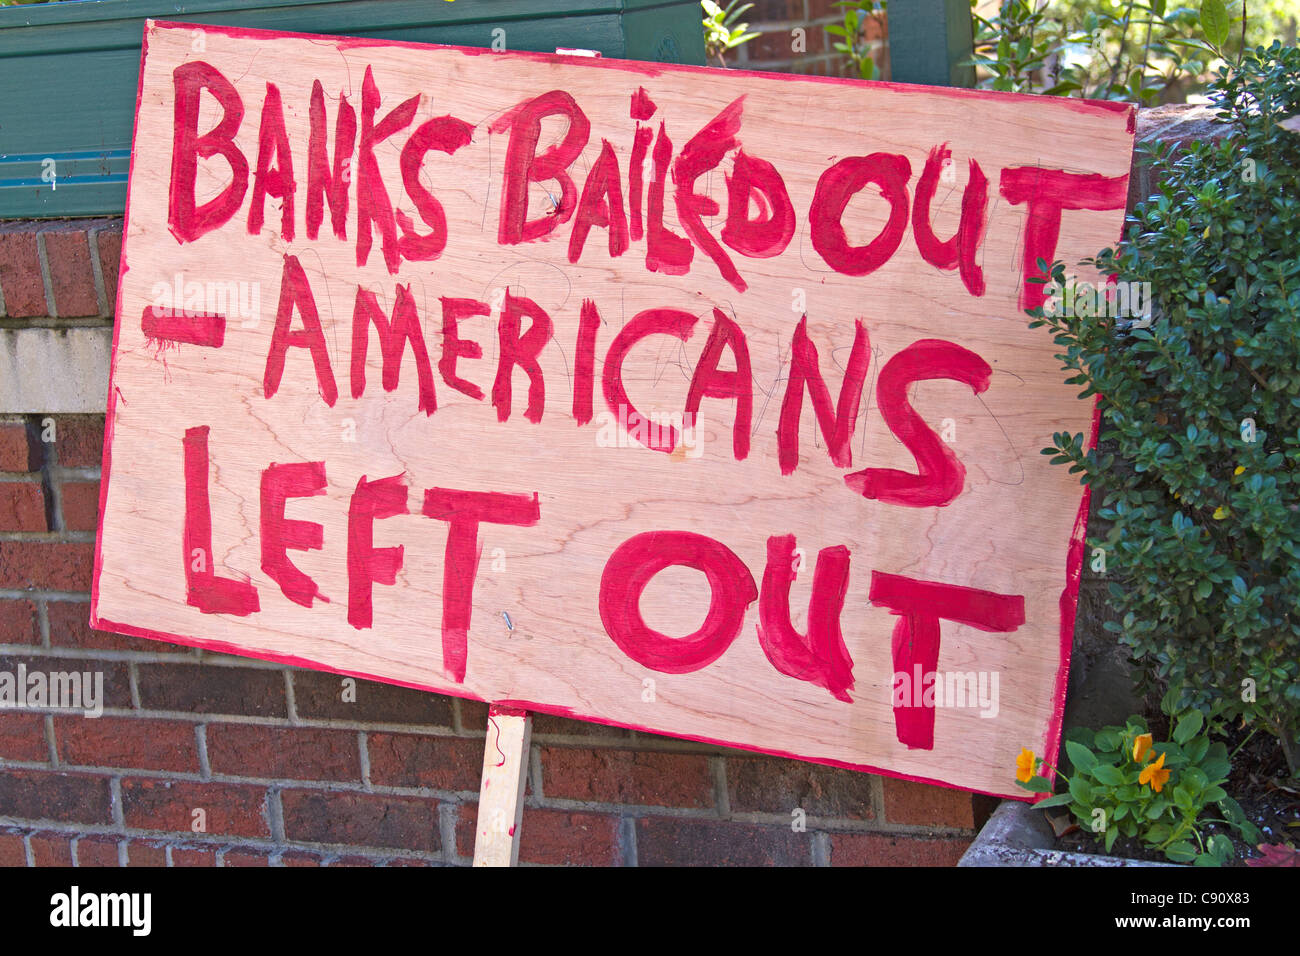 Primer plano de una fianza bancaria casero fuera signo de protesta del movimiento Occupy Wall Street Foto de stock